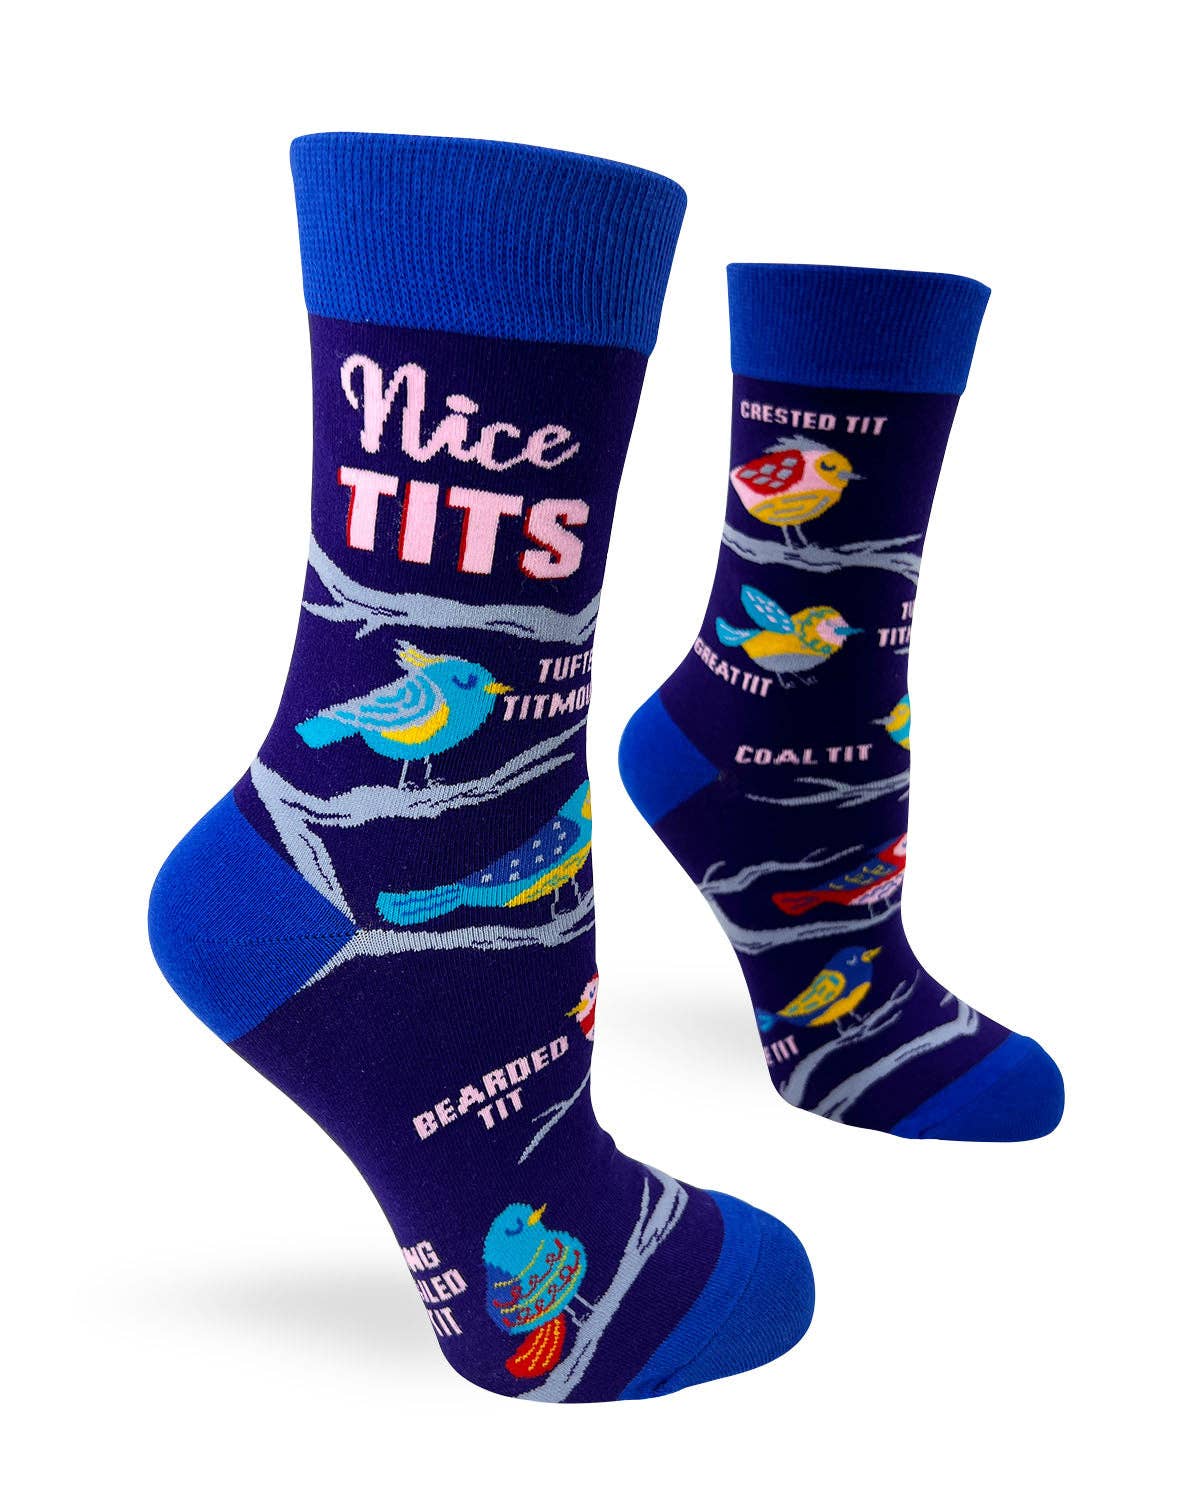 Women's "Nice Tits" Socks